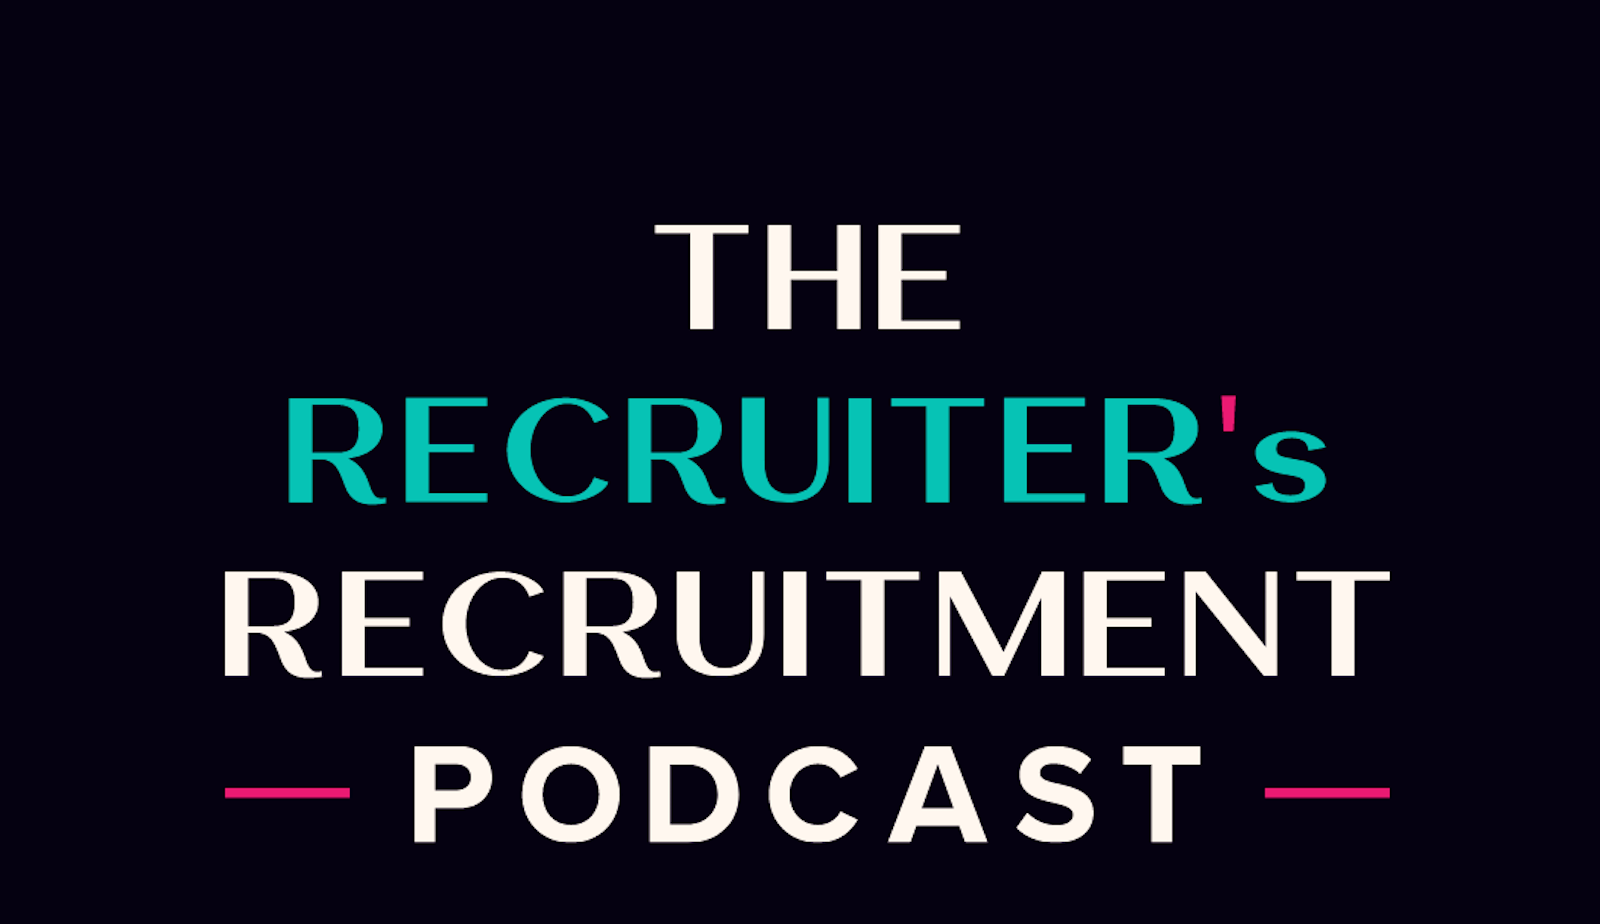 The Recruiter's Recruitment Podcast